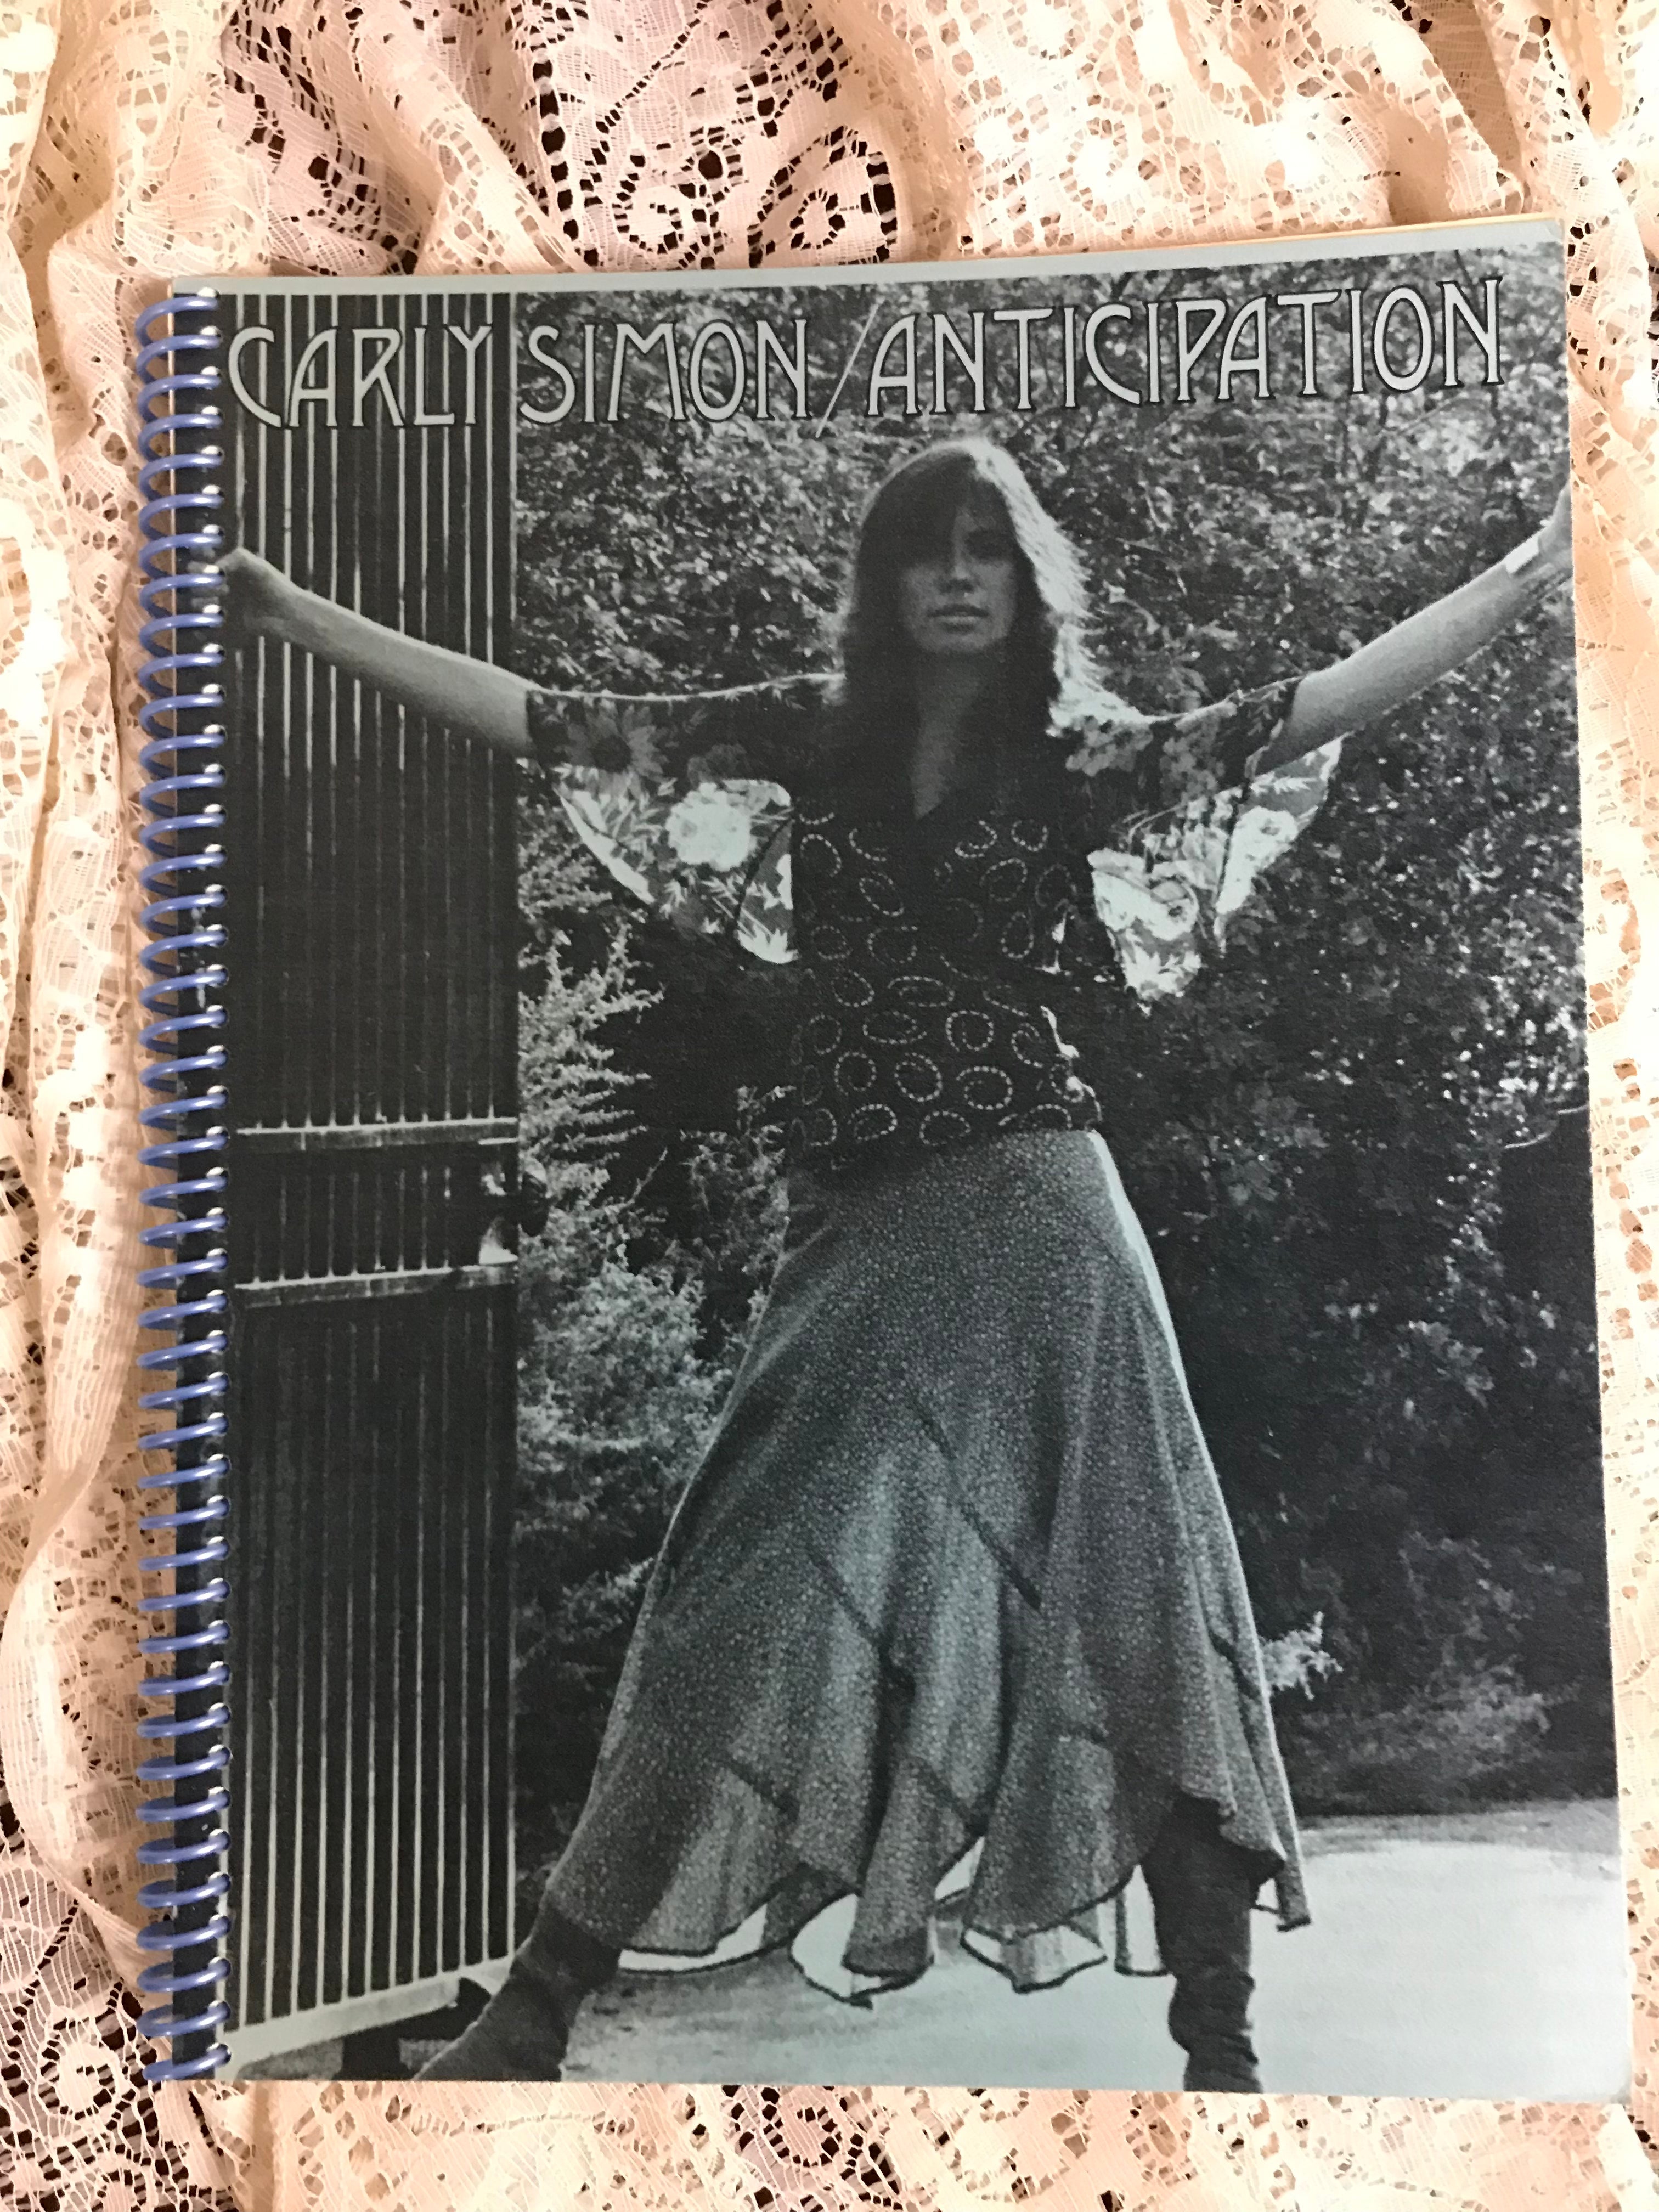 Carly Simon Anticipation Album Cover Notebook